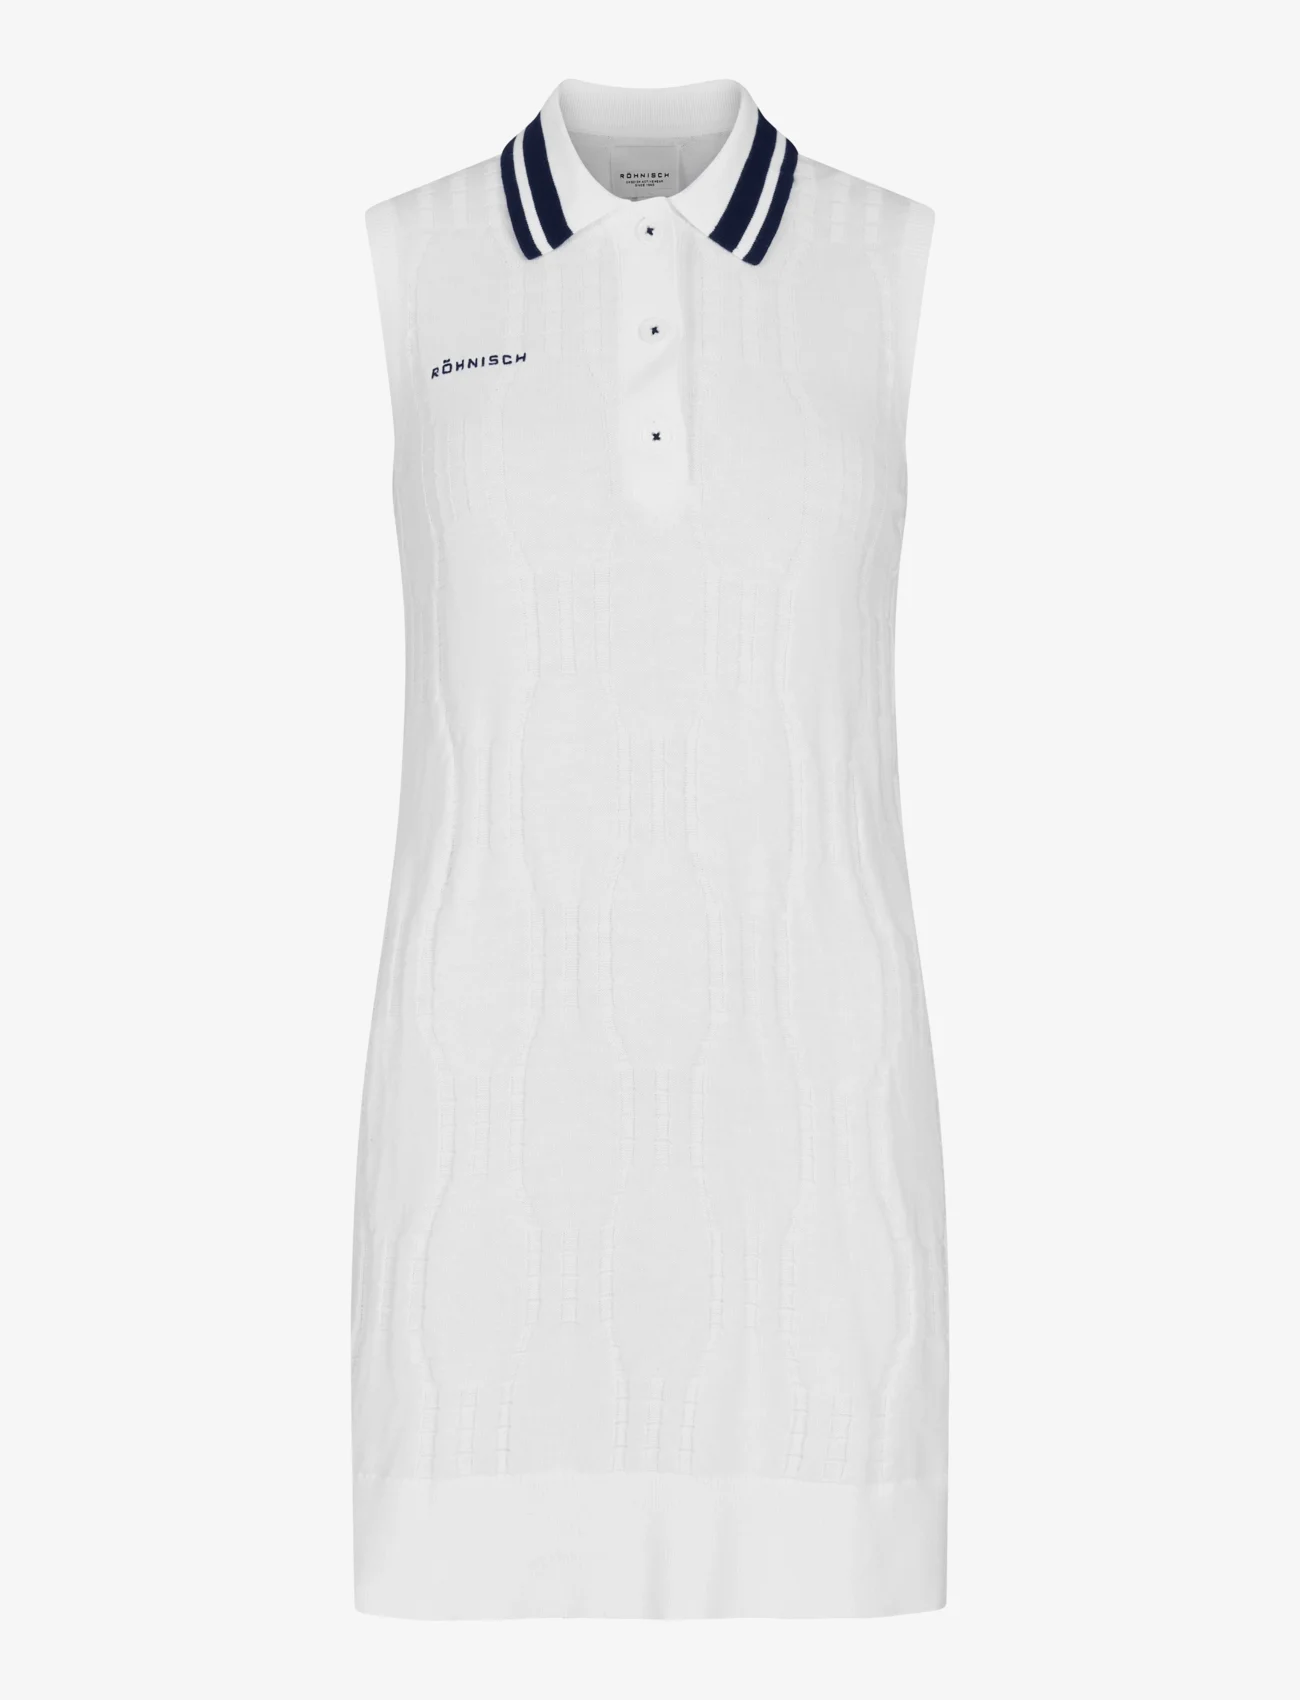 Röhnisch - Riviera knit dress - sports dresses - white - 0